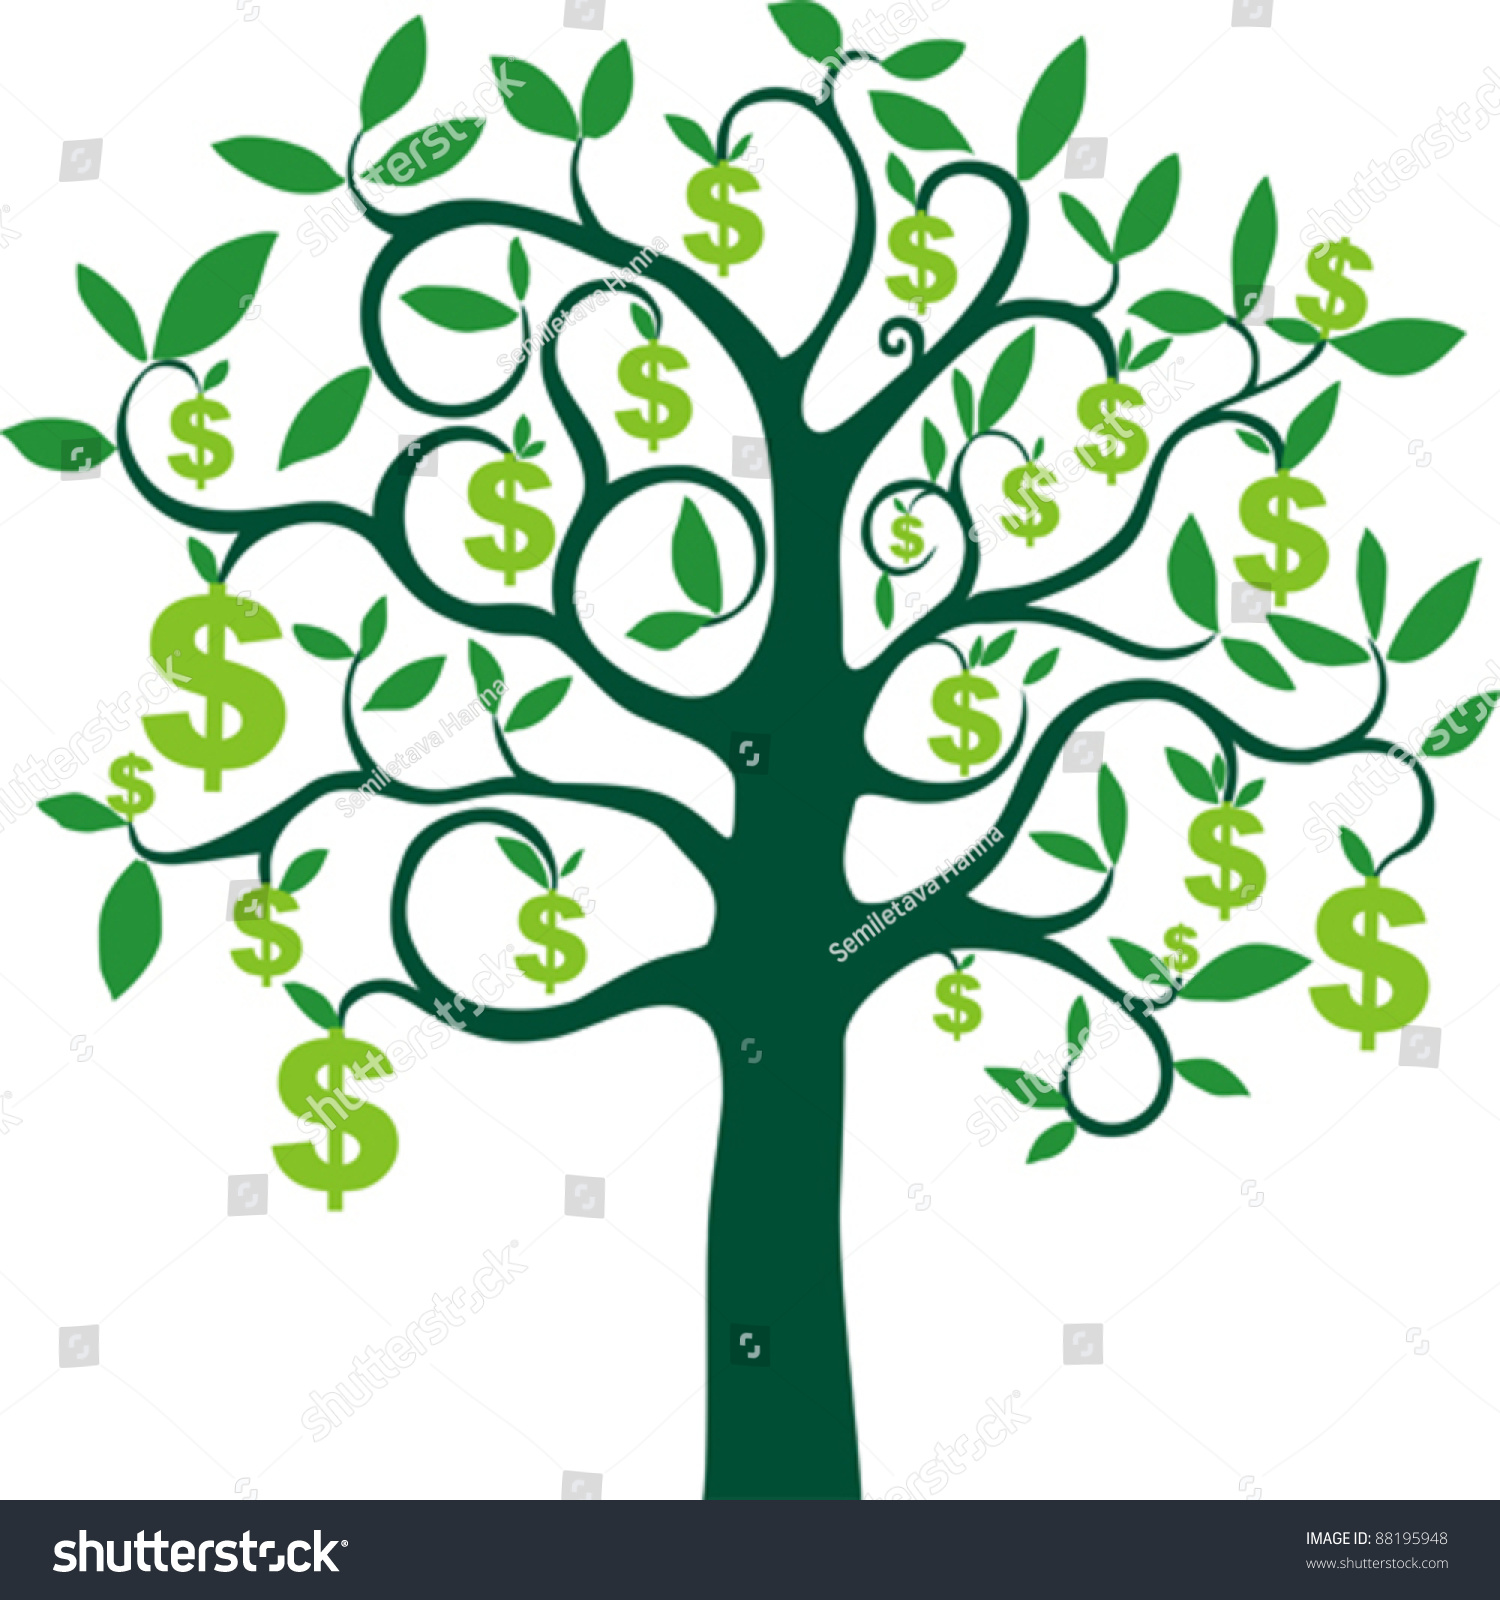 clipart of money tree - photo #31